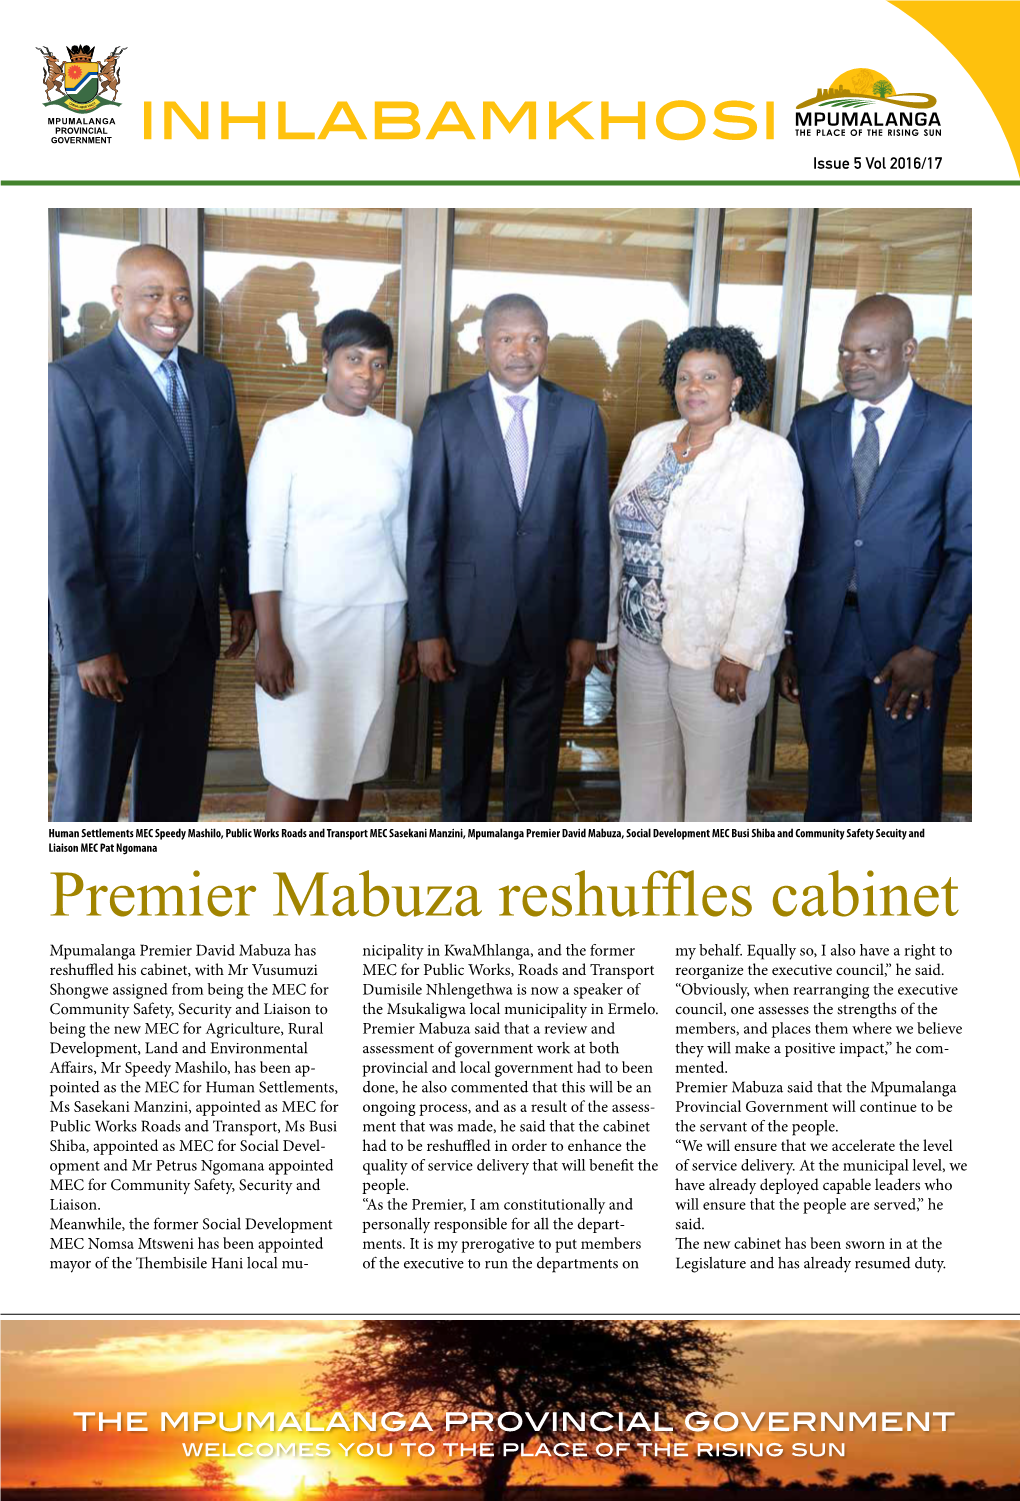 Premier Mabuza Reshuffles Cabinet Mpumalanga Premier David Mabuza Has Nicipality in Kwamhlanga, and the Former My Behalf